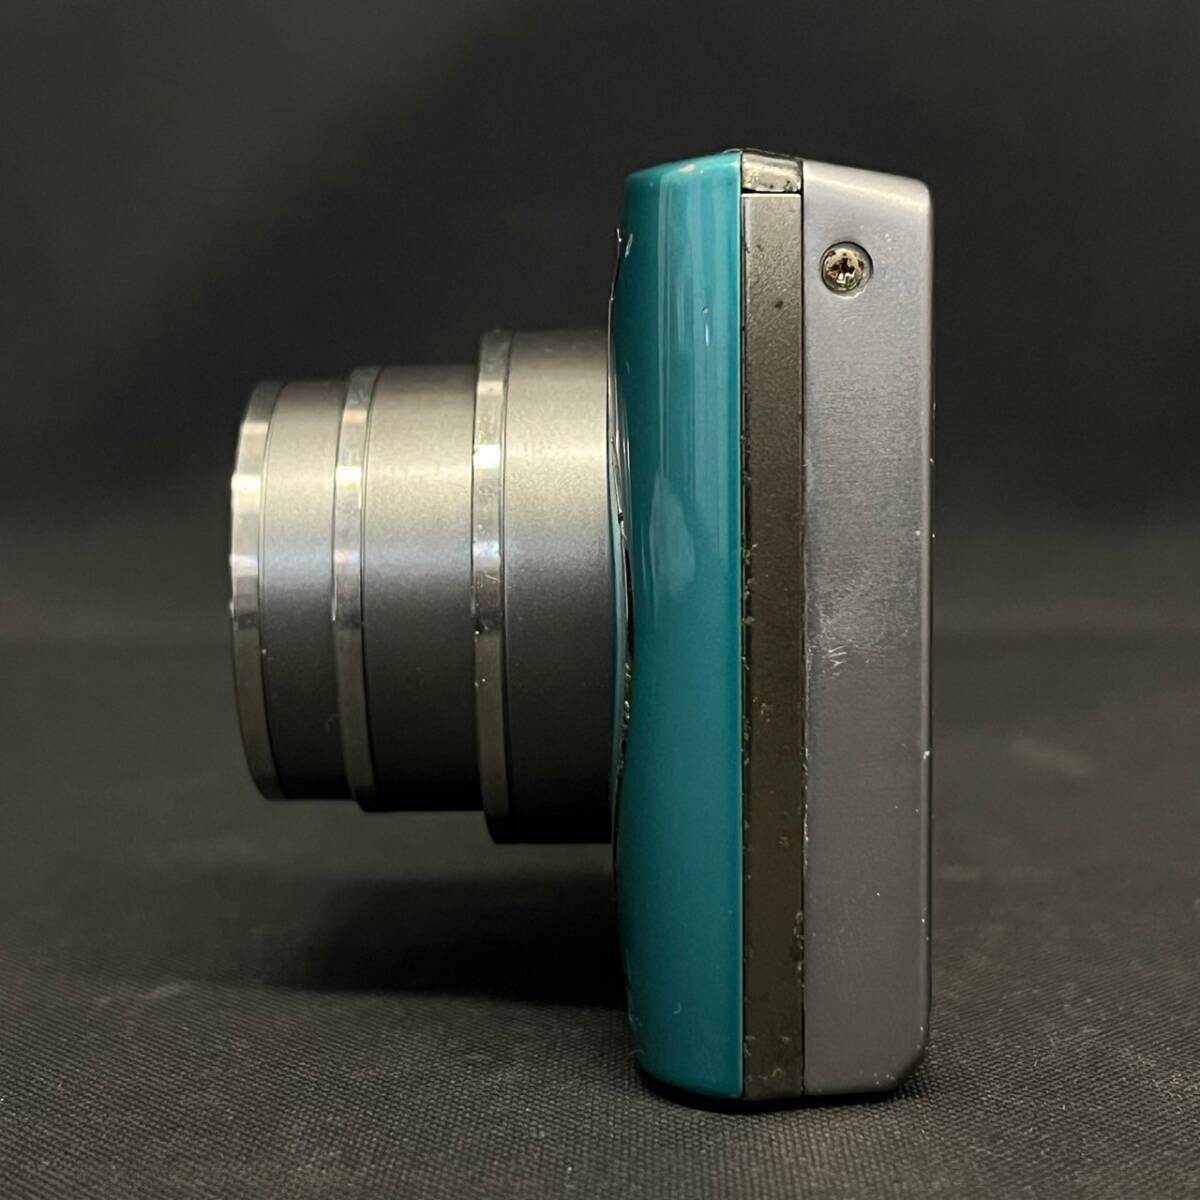 BDd198R 60 CASIO EXILIM EX-Z2300 14.1MEGA PIXELS エクシリム 26mm WIDE OPTICAL 5x f=4.7-23.5mm 1:2.8-6.5 ブルー デジタルカメラの画像3